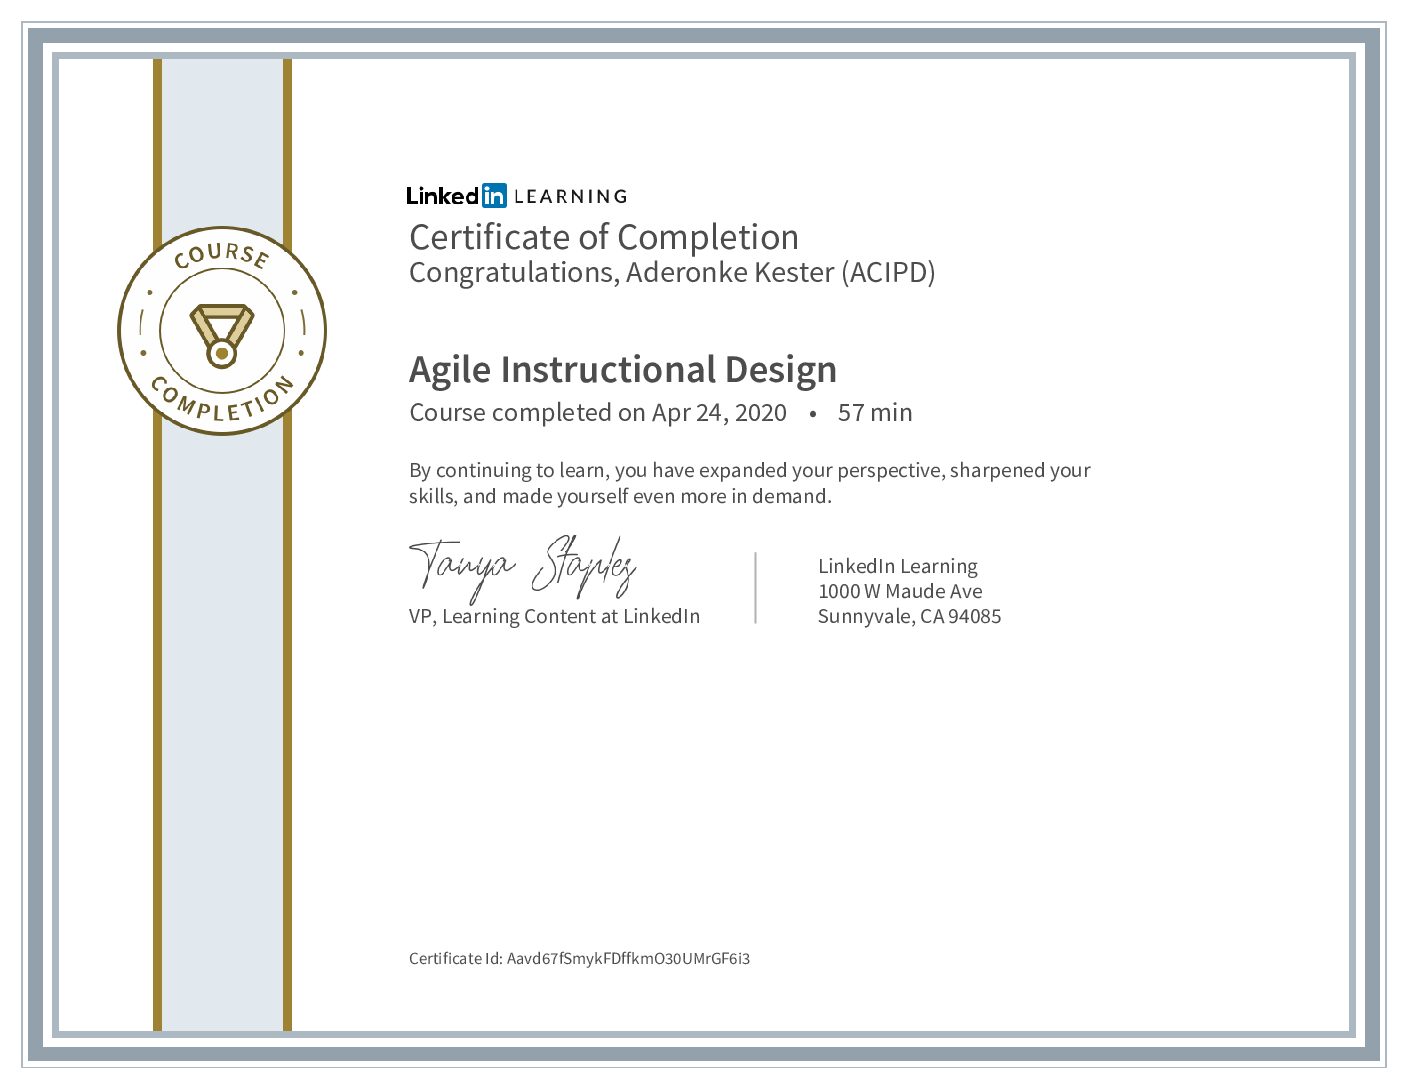 CertificateOfCompletion_Agile Instructional Design